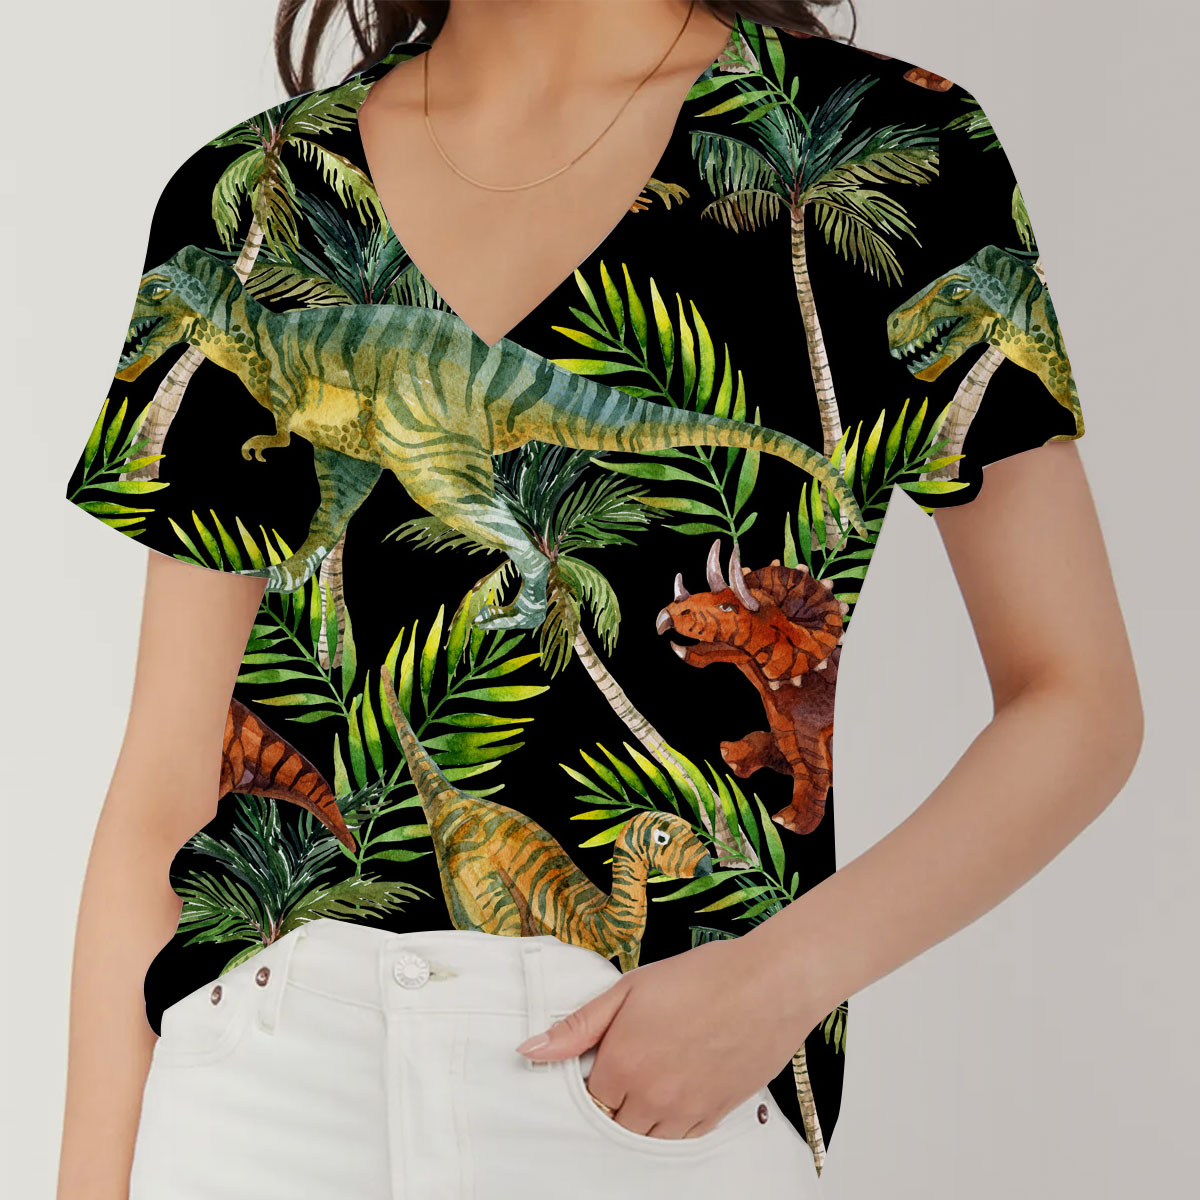 Dinosaur Palm Leaf V-Neck Women's T-Shirt_1_2.1